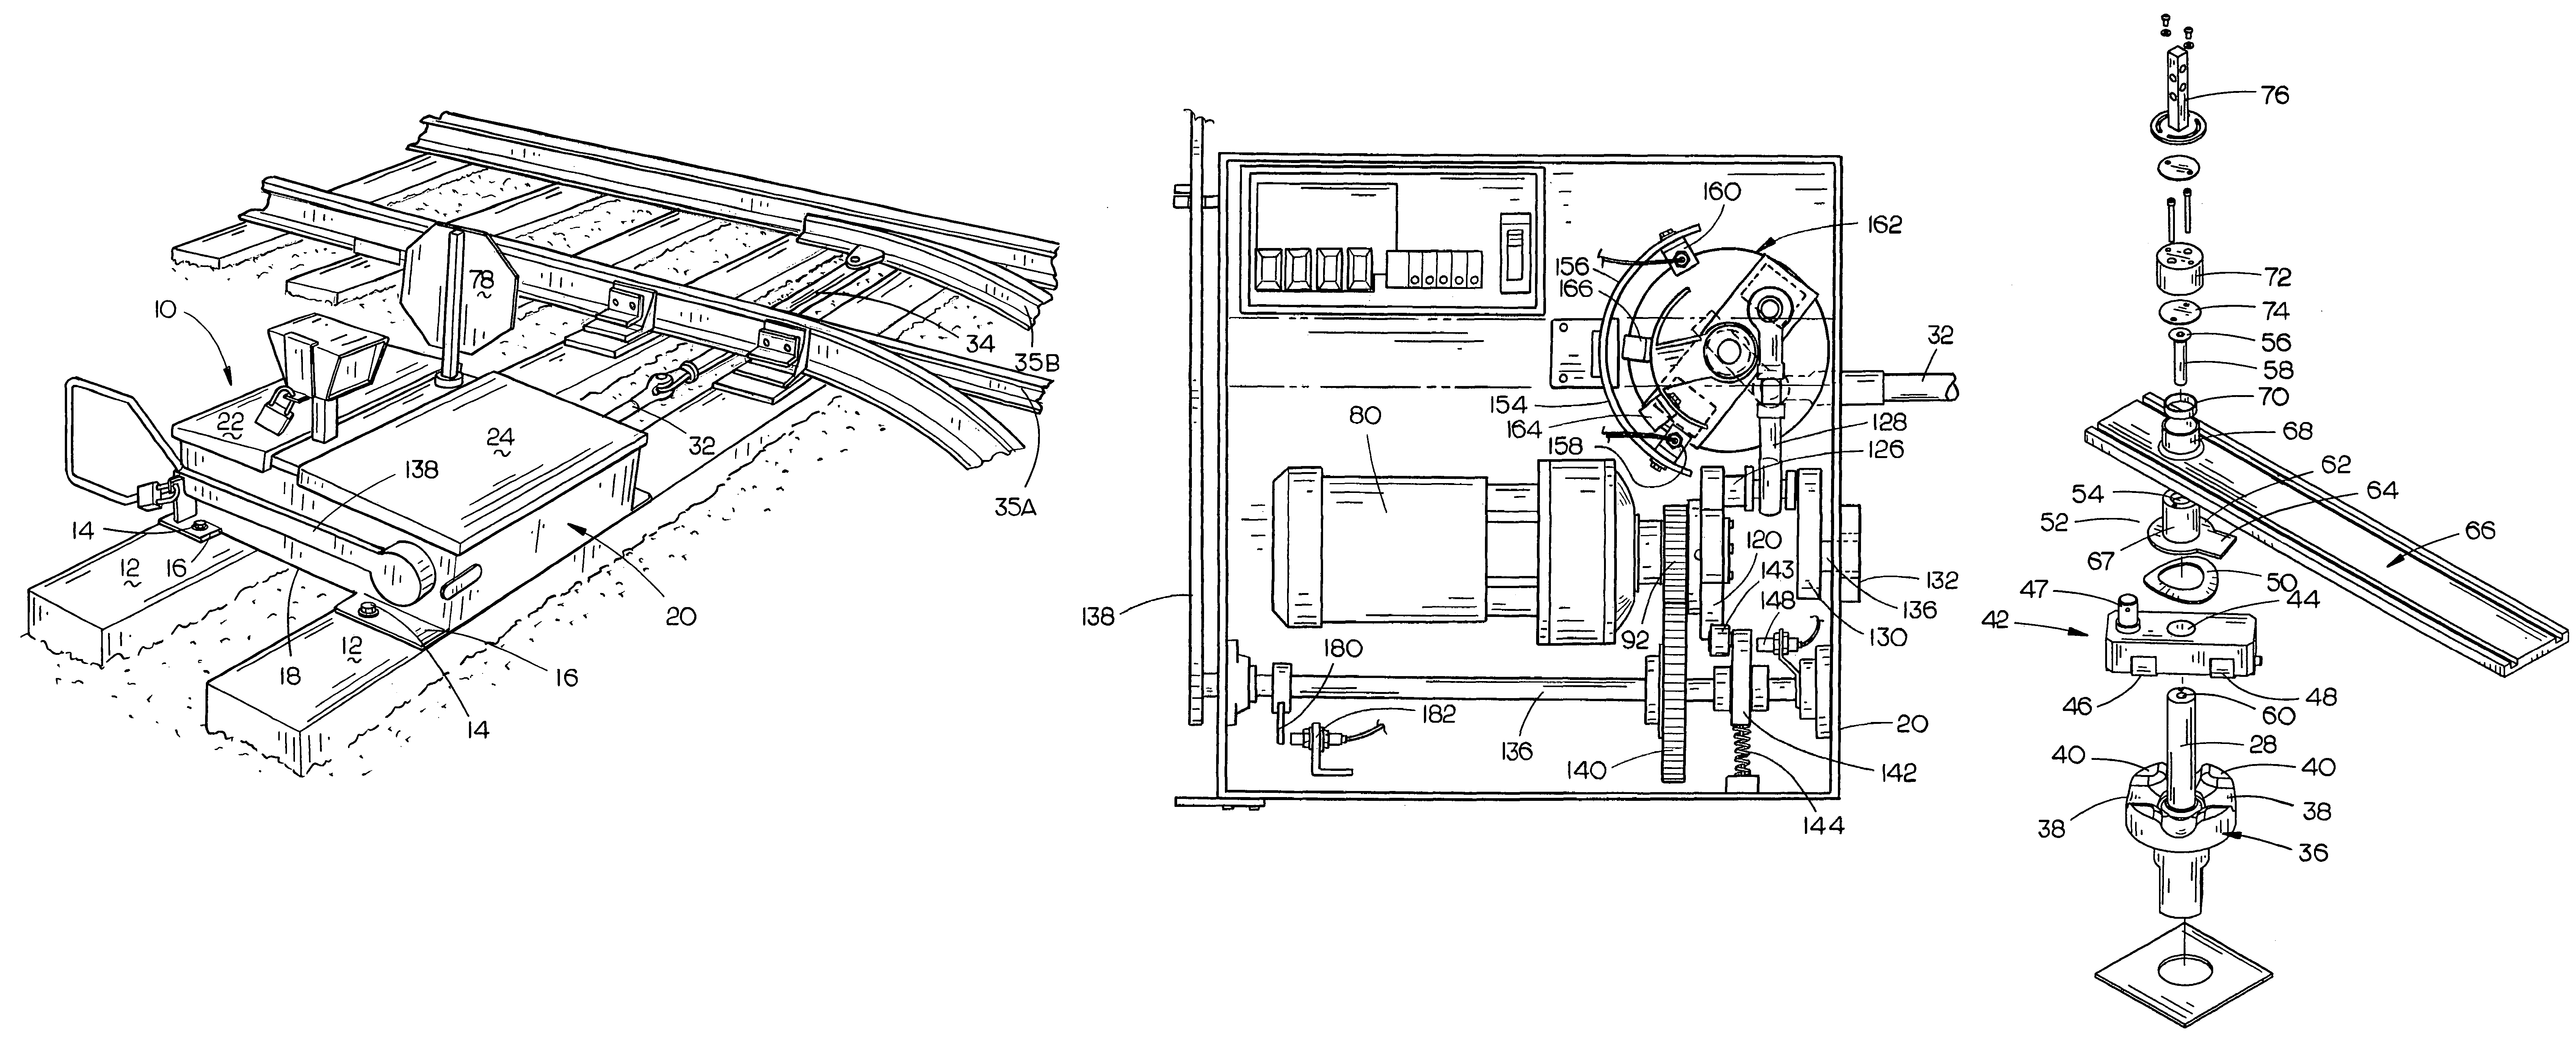 Railroad yard switch machine